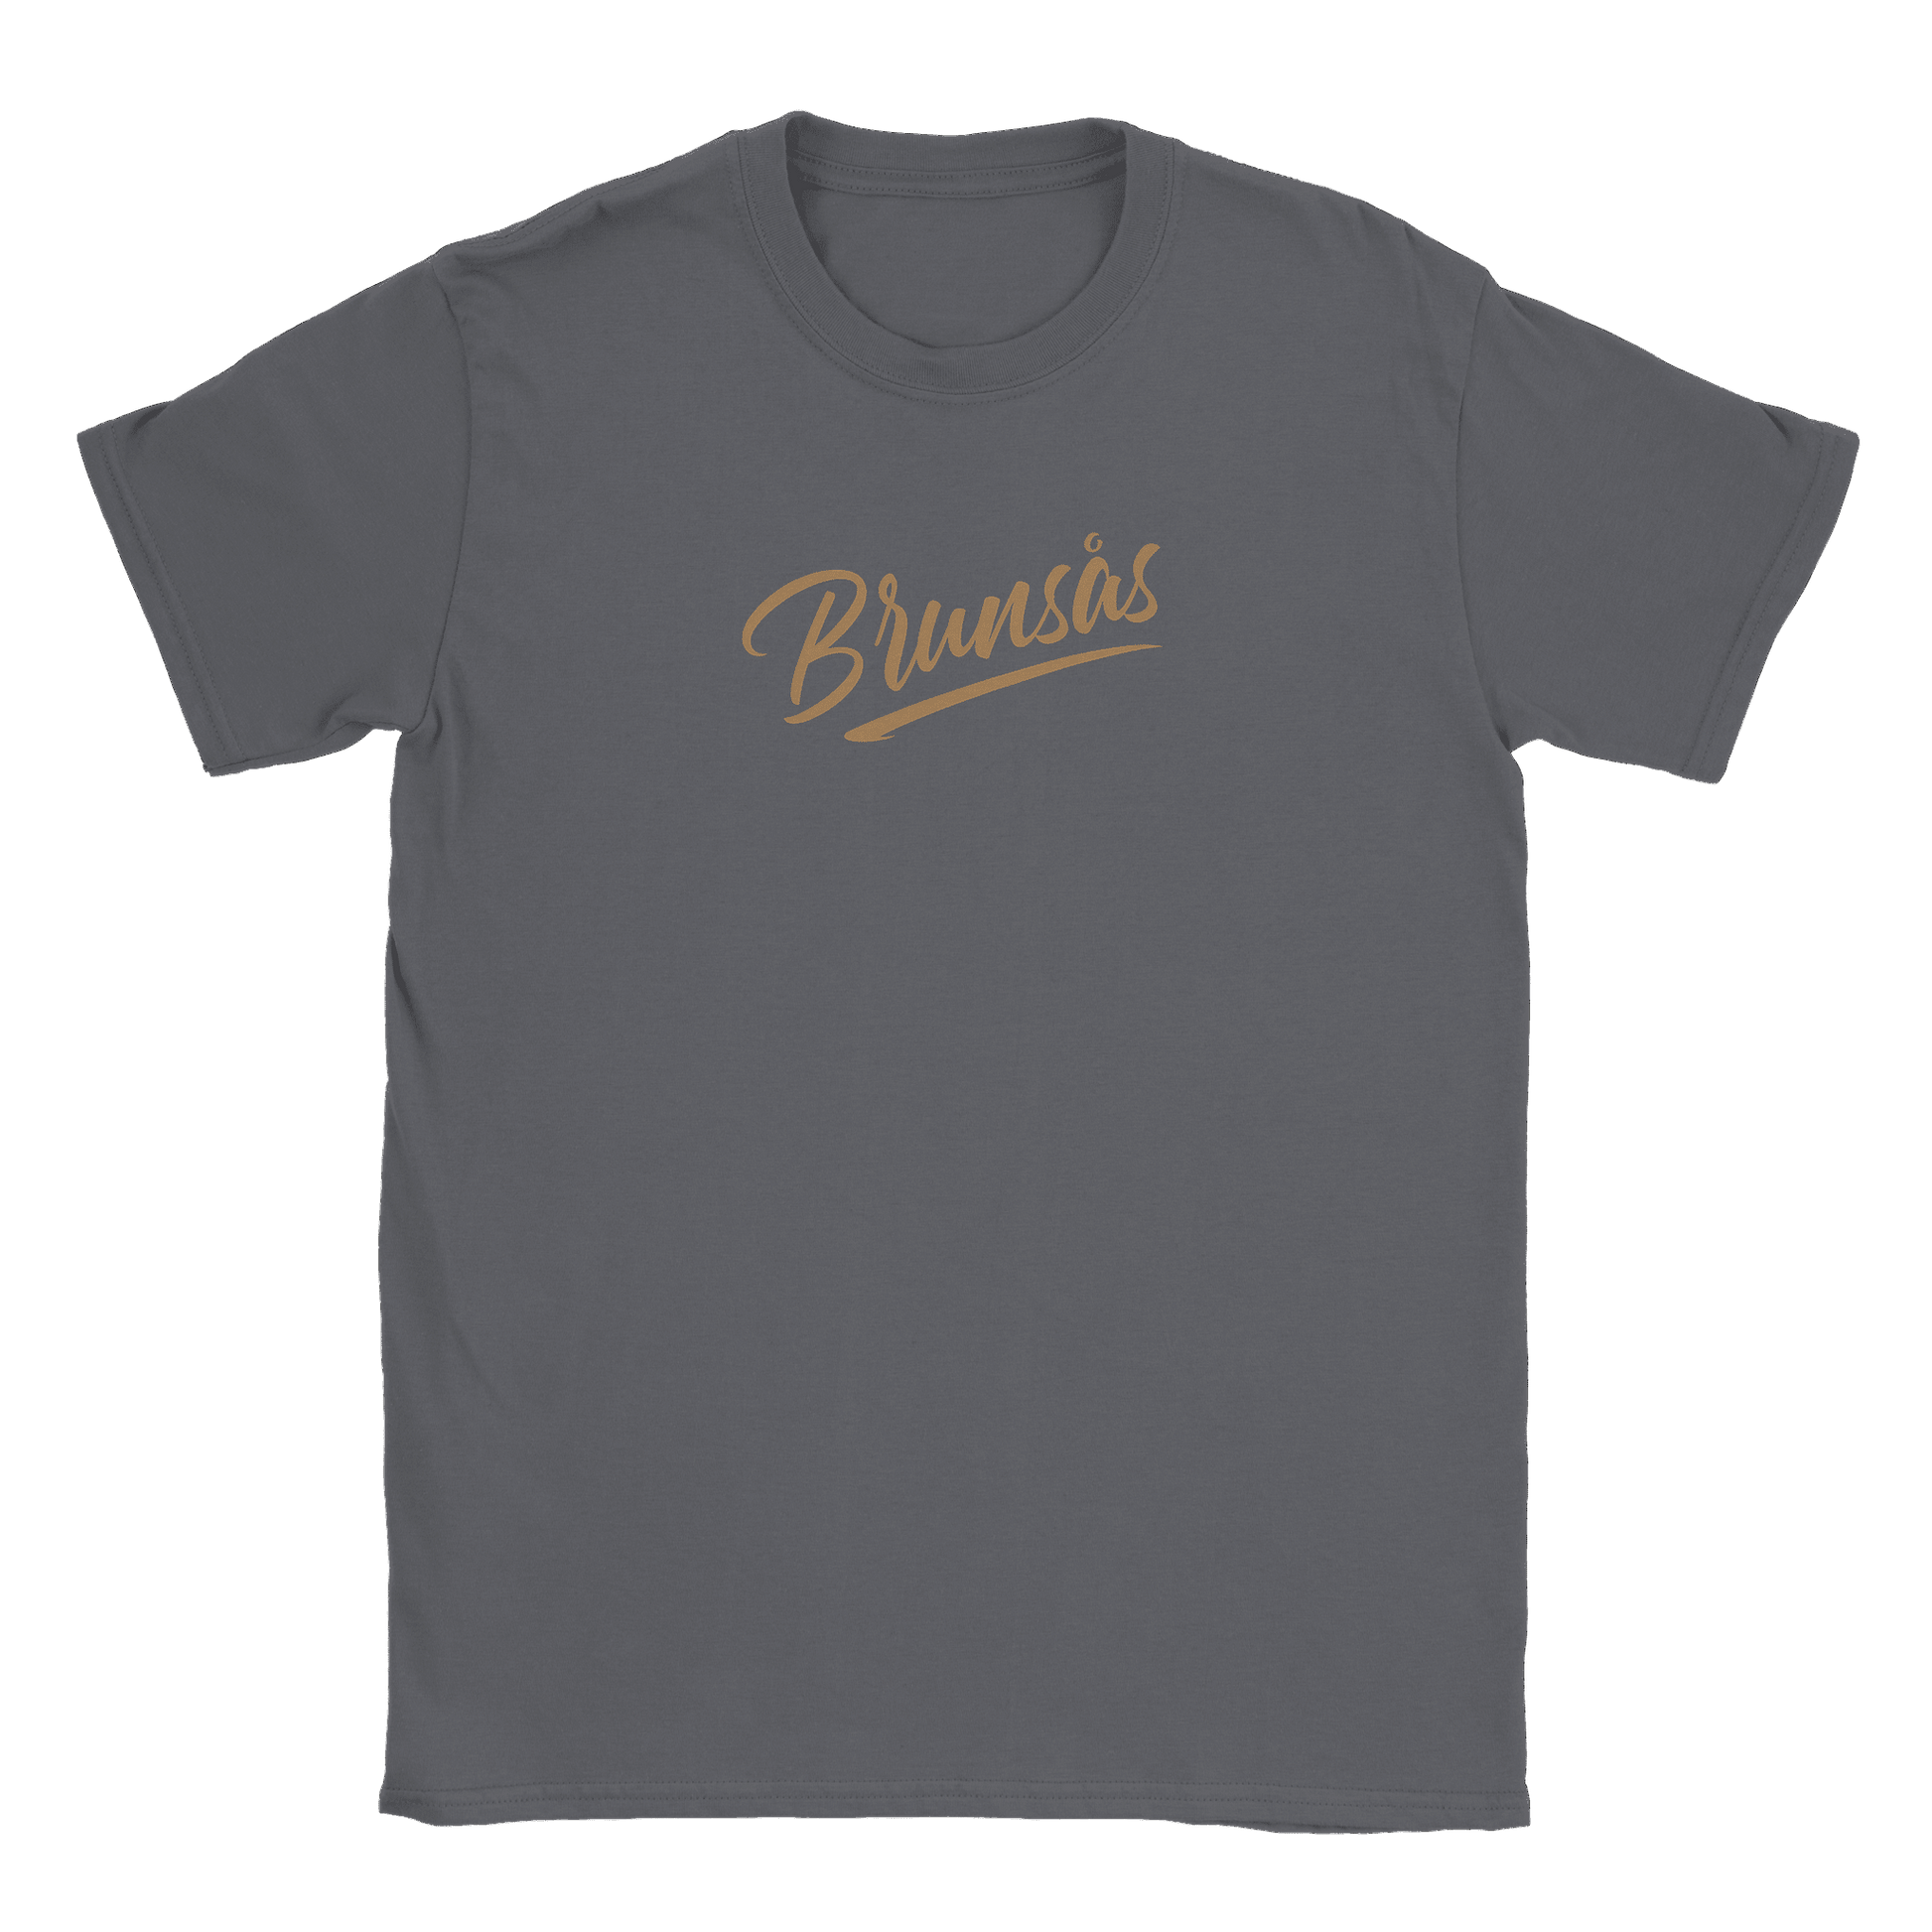 Brunsås - T-shirt Charcoal